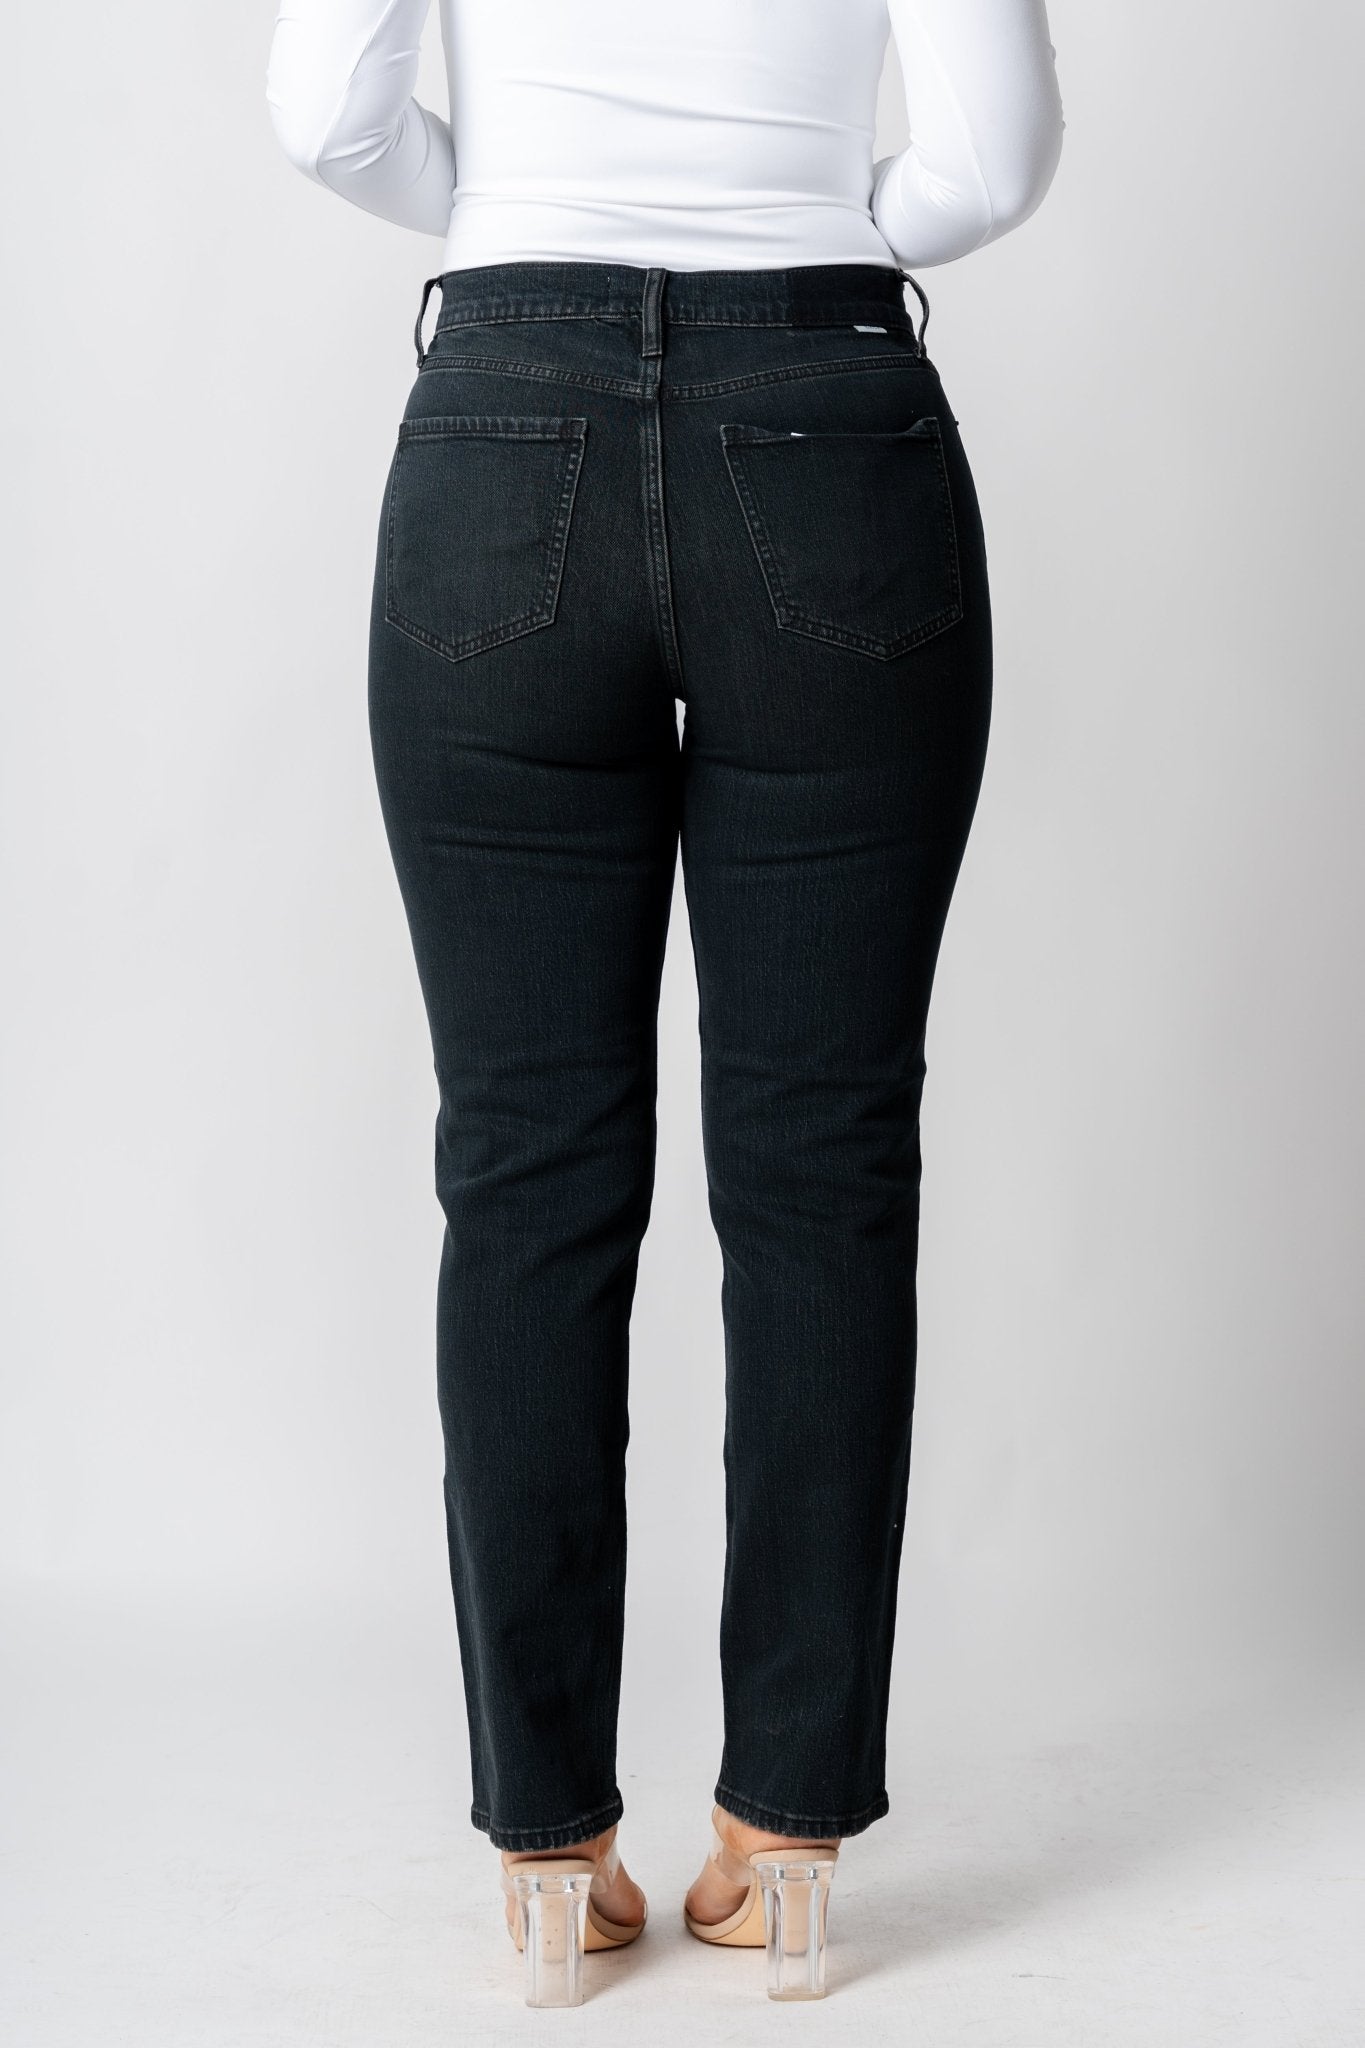 Daze high rise slim straight jeans inked | Lush Fashion Lounge: boutique women's jeans, fashion jeans for women, affordable fashion jeans, cute boutique jeans